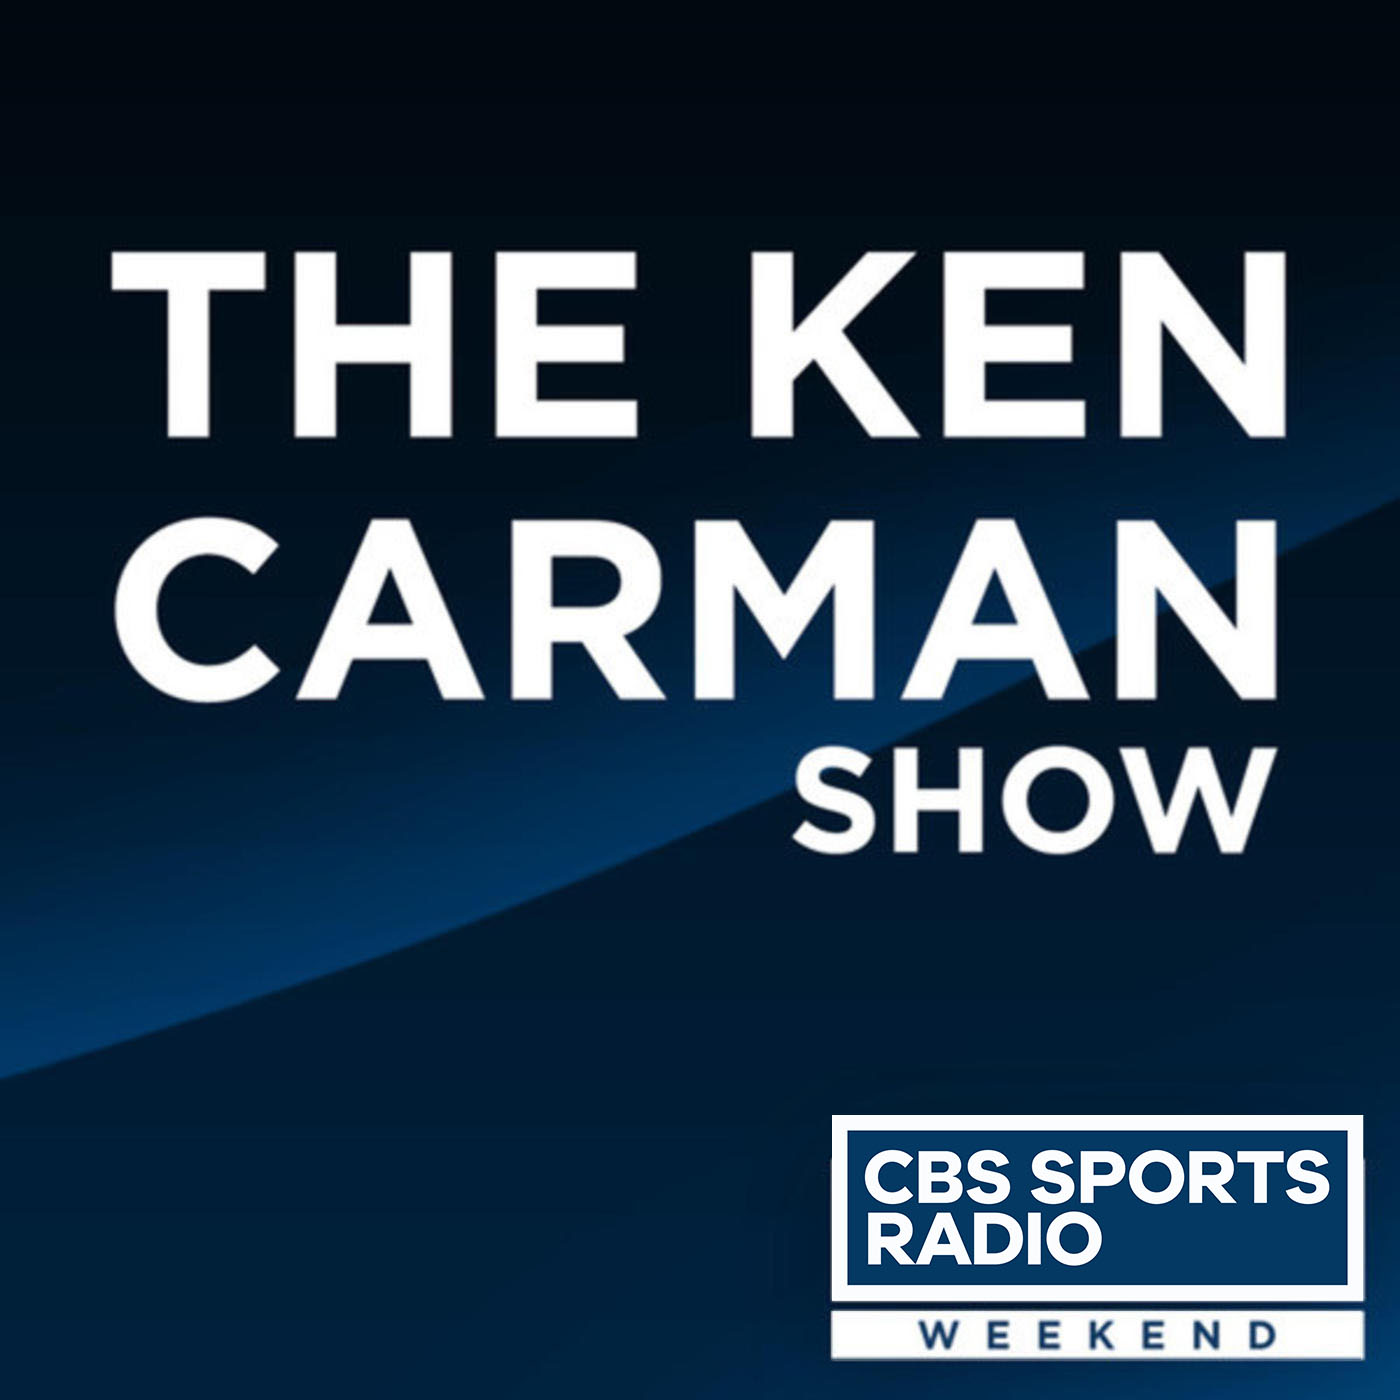 The Ken Carman Show 2-15-20 Hour 2